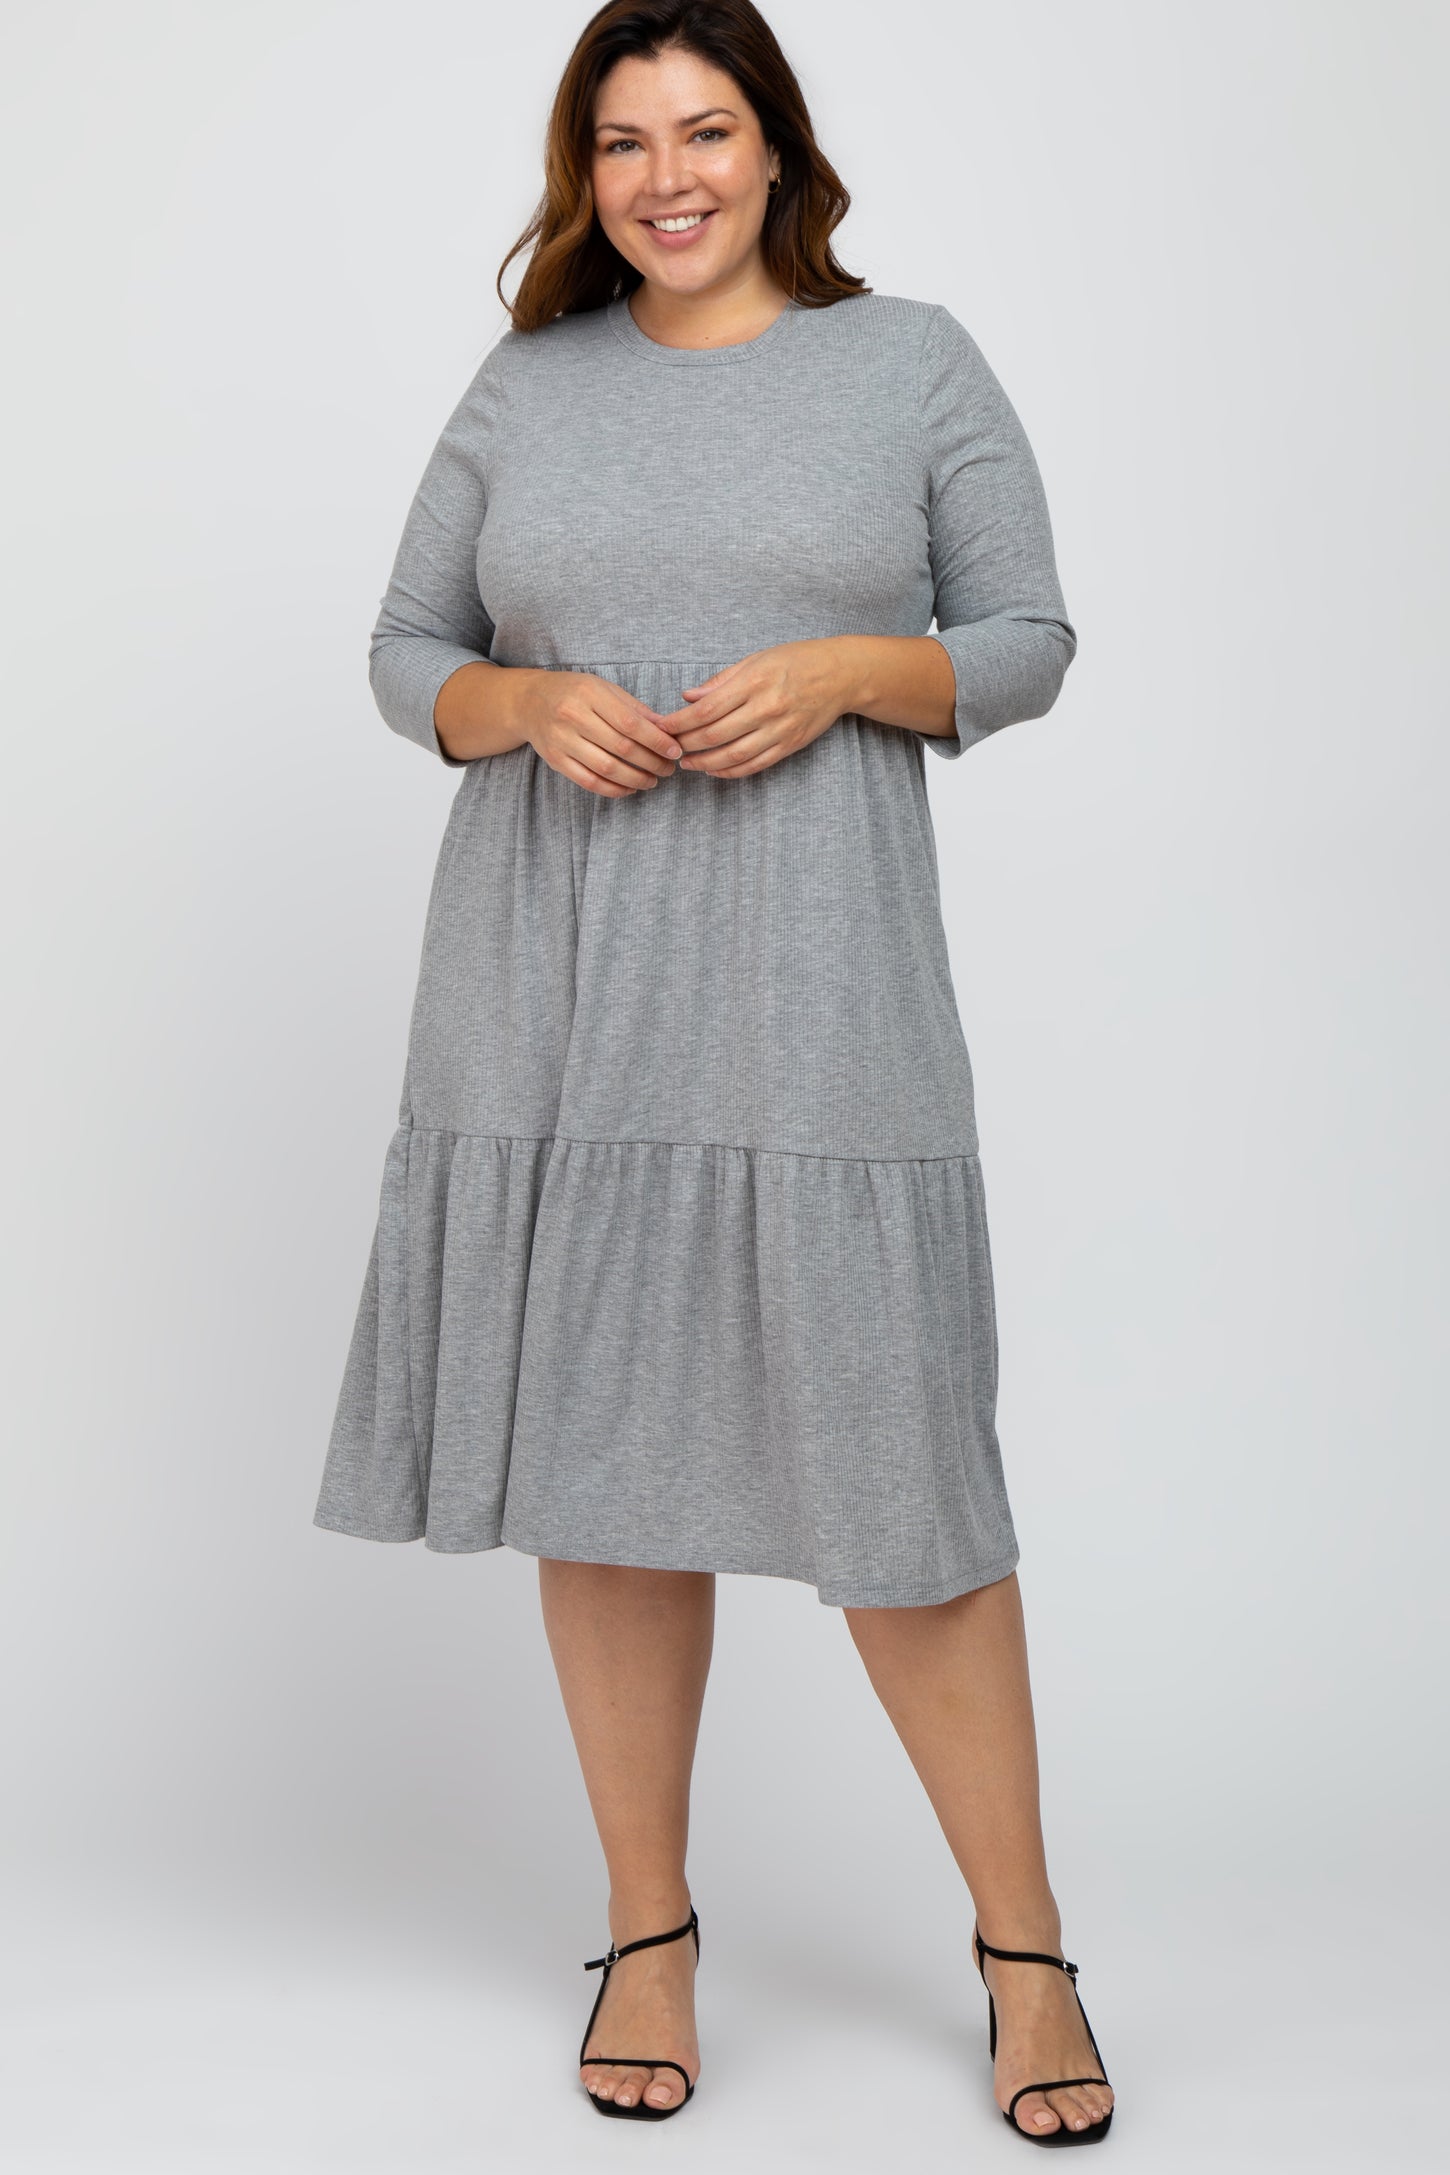 Heather Grey Tiered Ribbed 3/4 Sleeve Plus Maternity Midi Dress